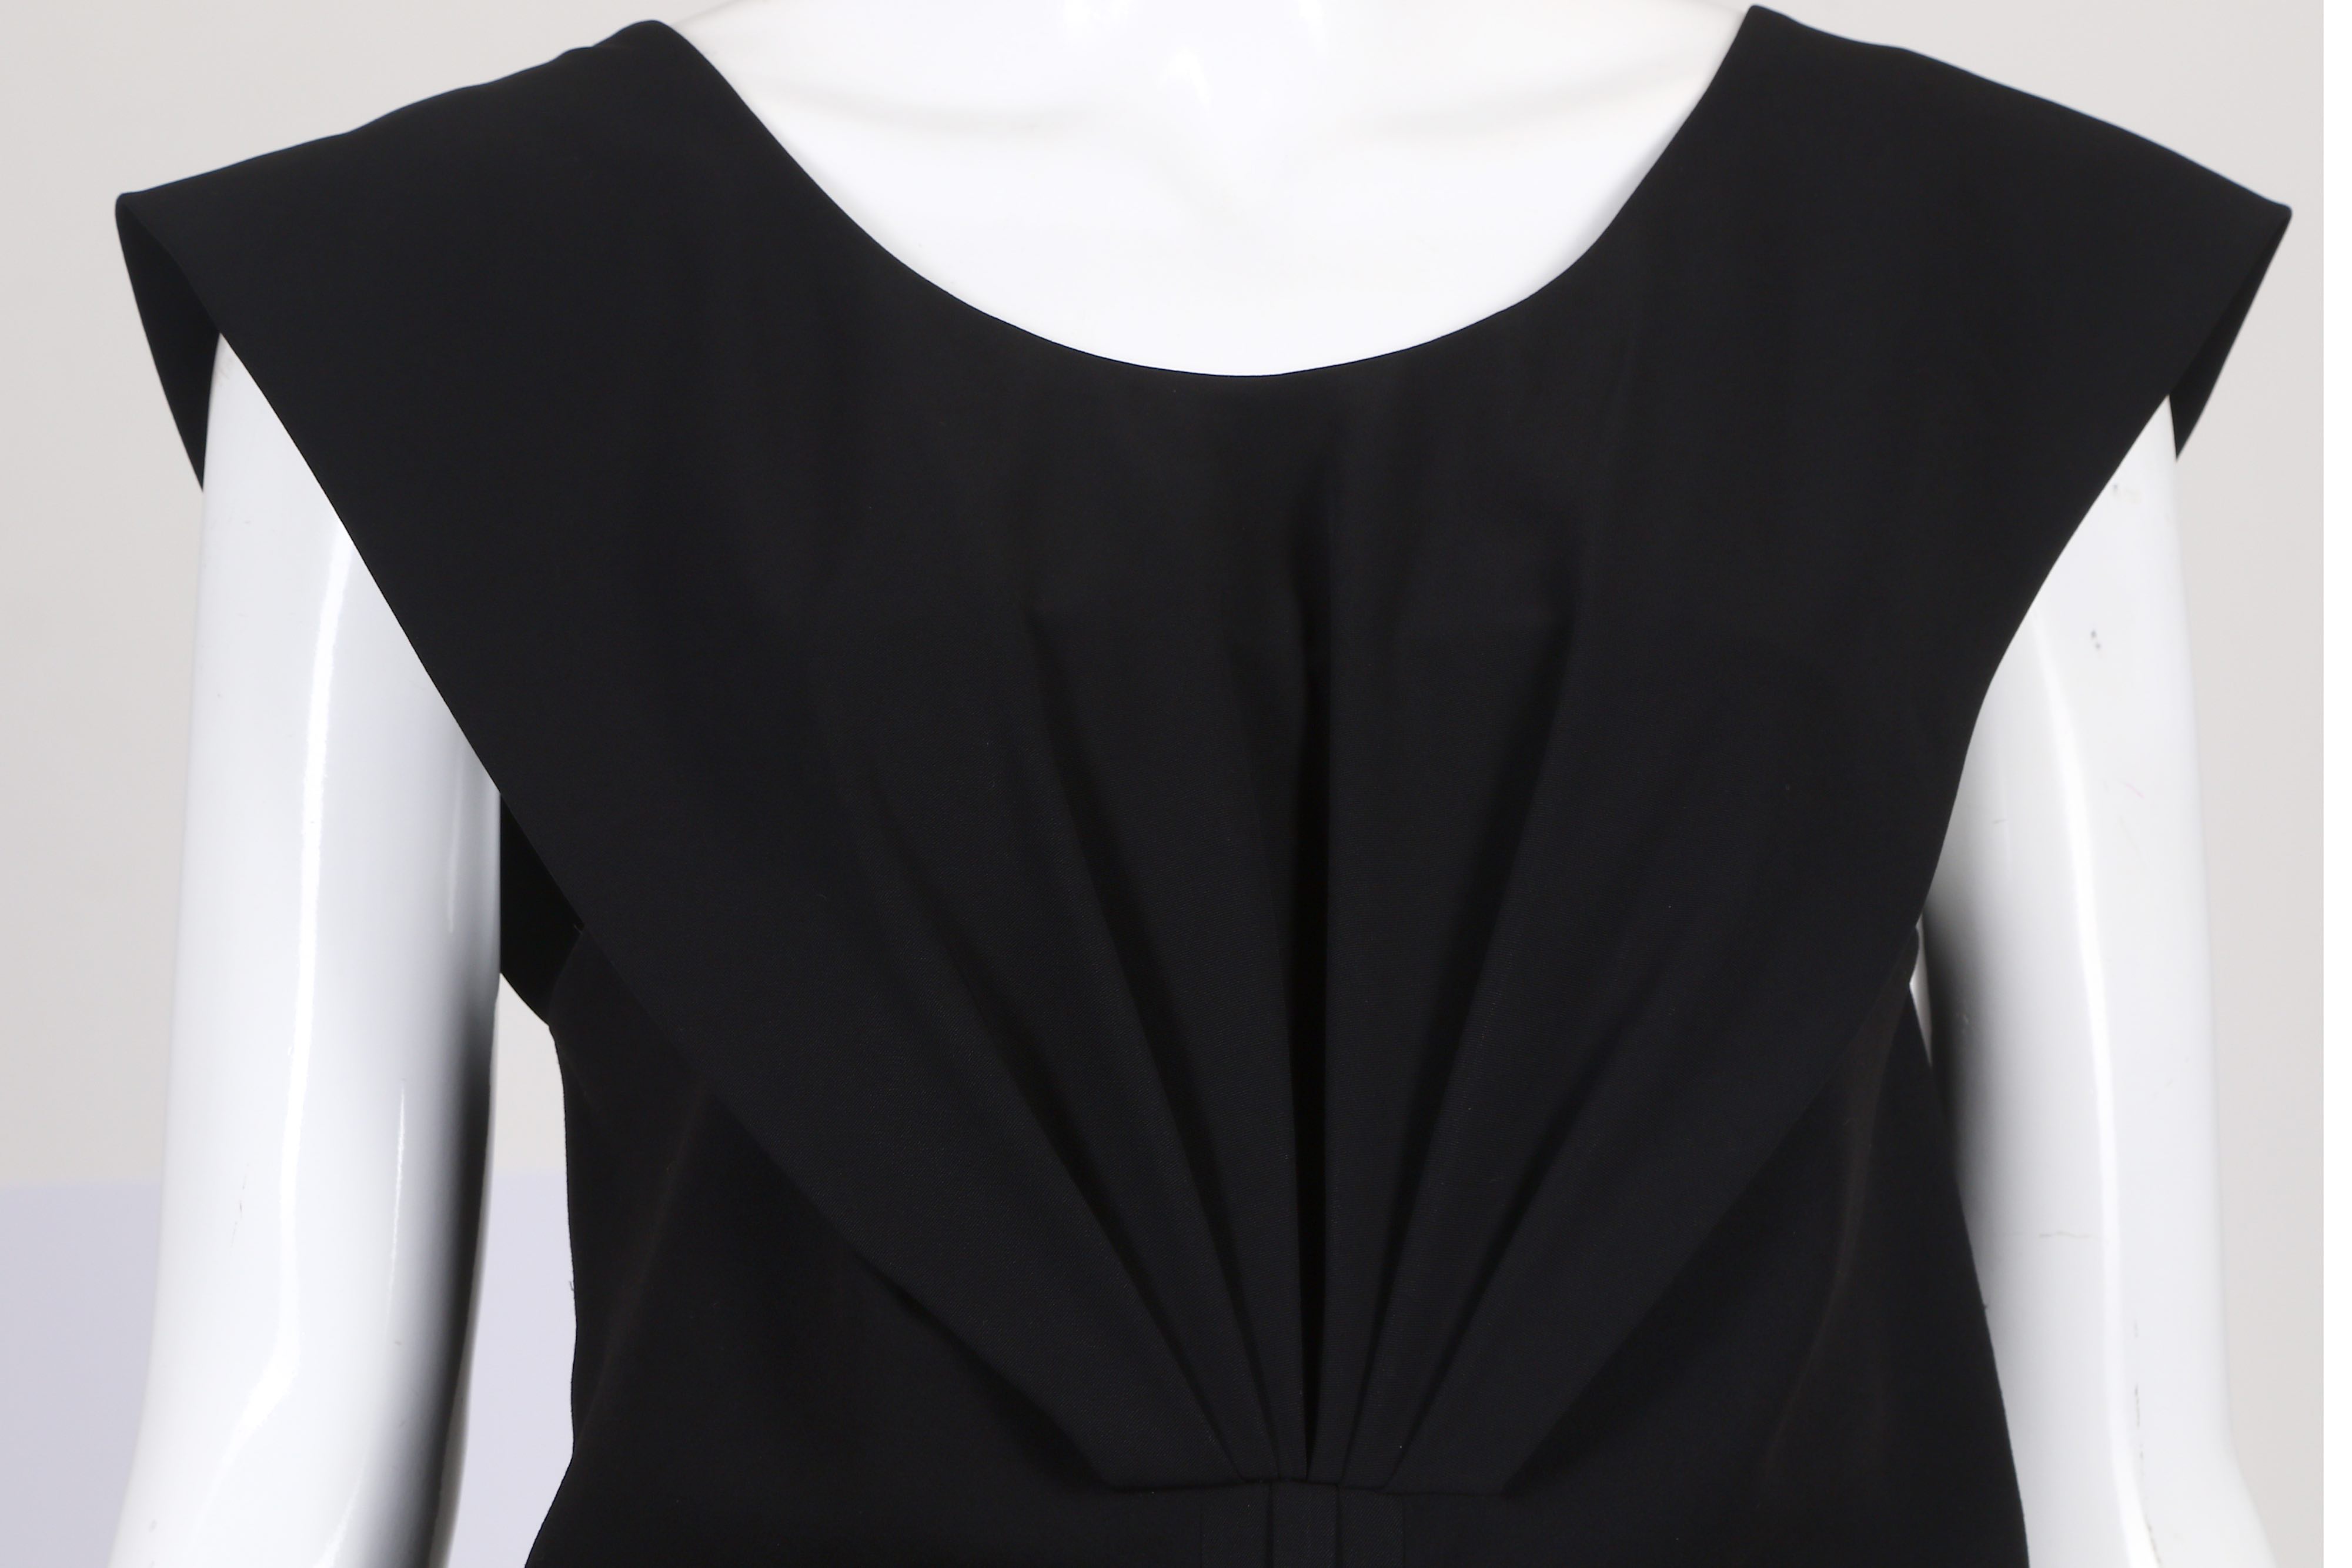 Balenciaga Black Dress - Image 2 of 5